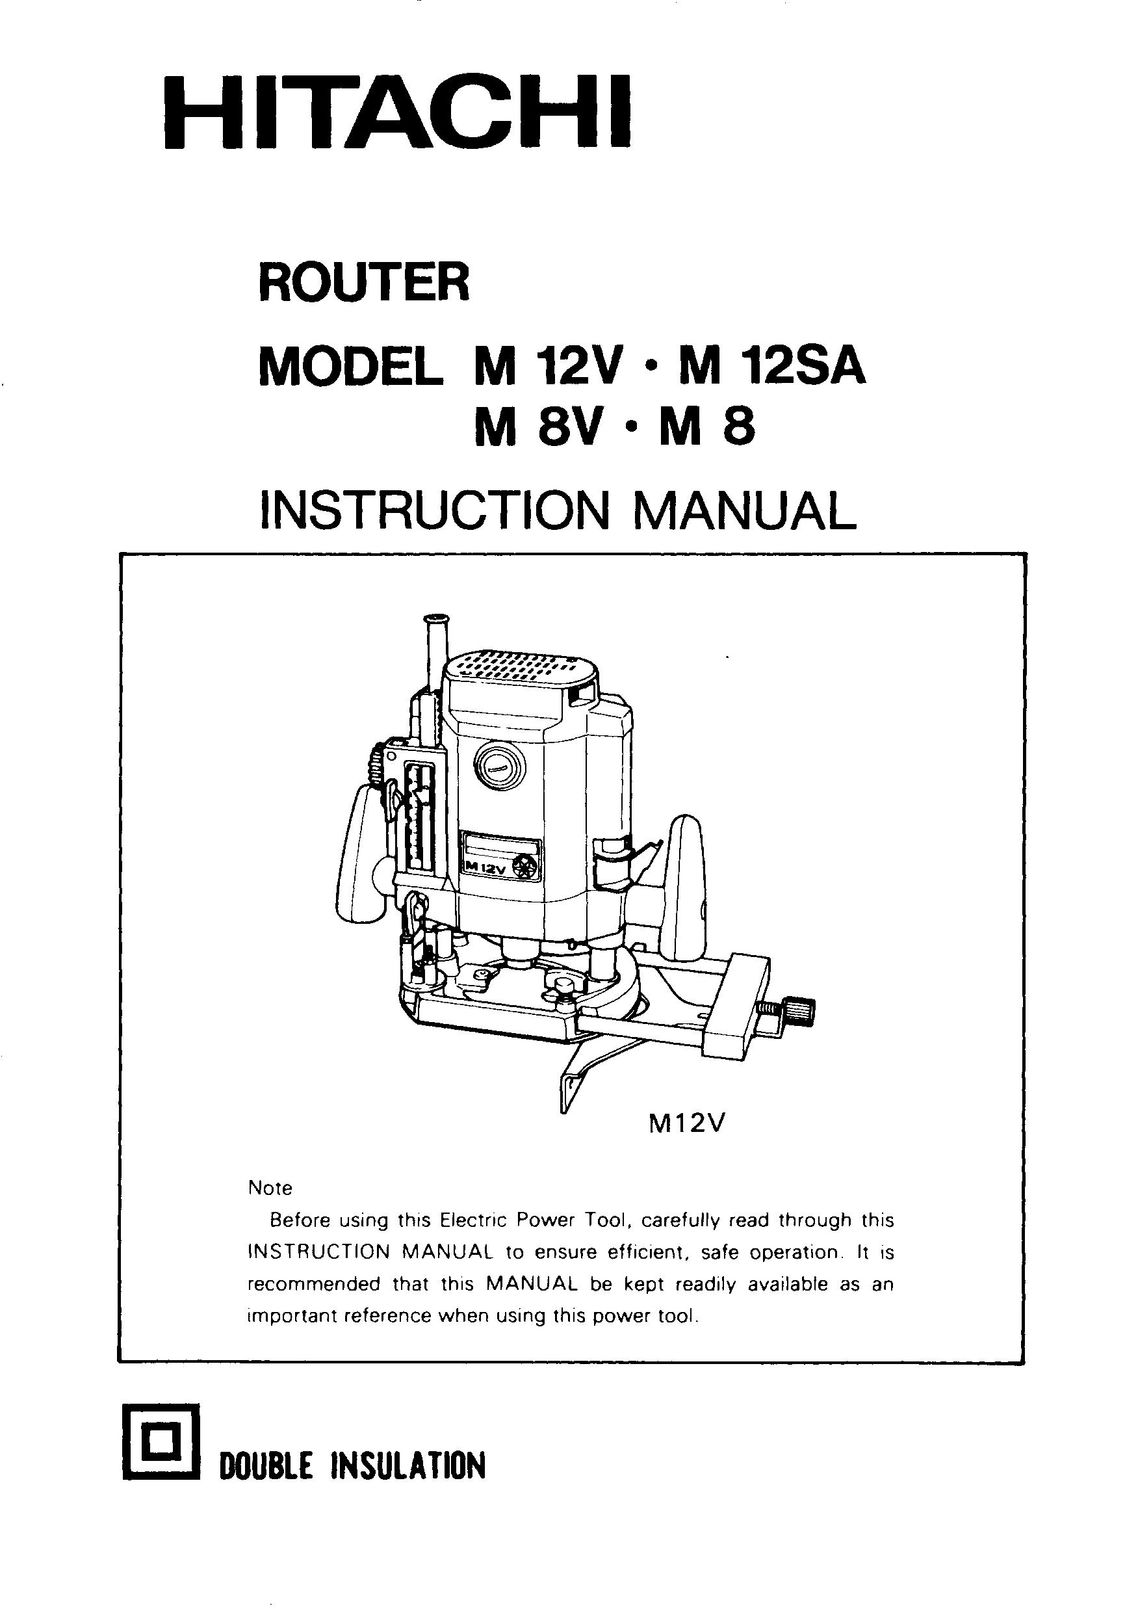 Hitachi M 12V Router User Manual